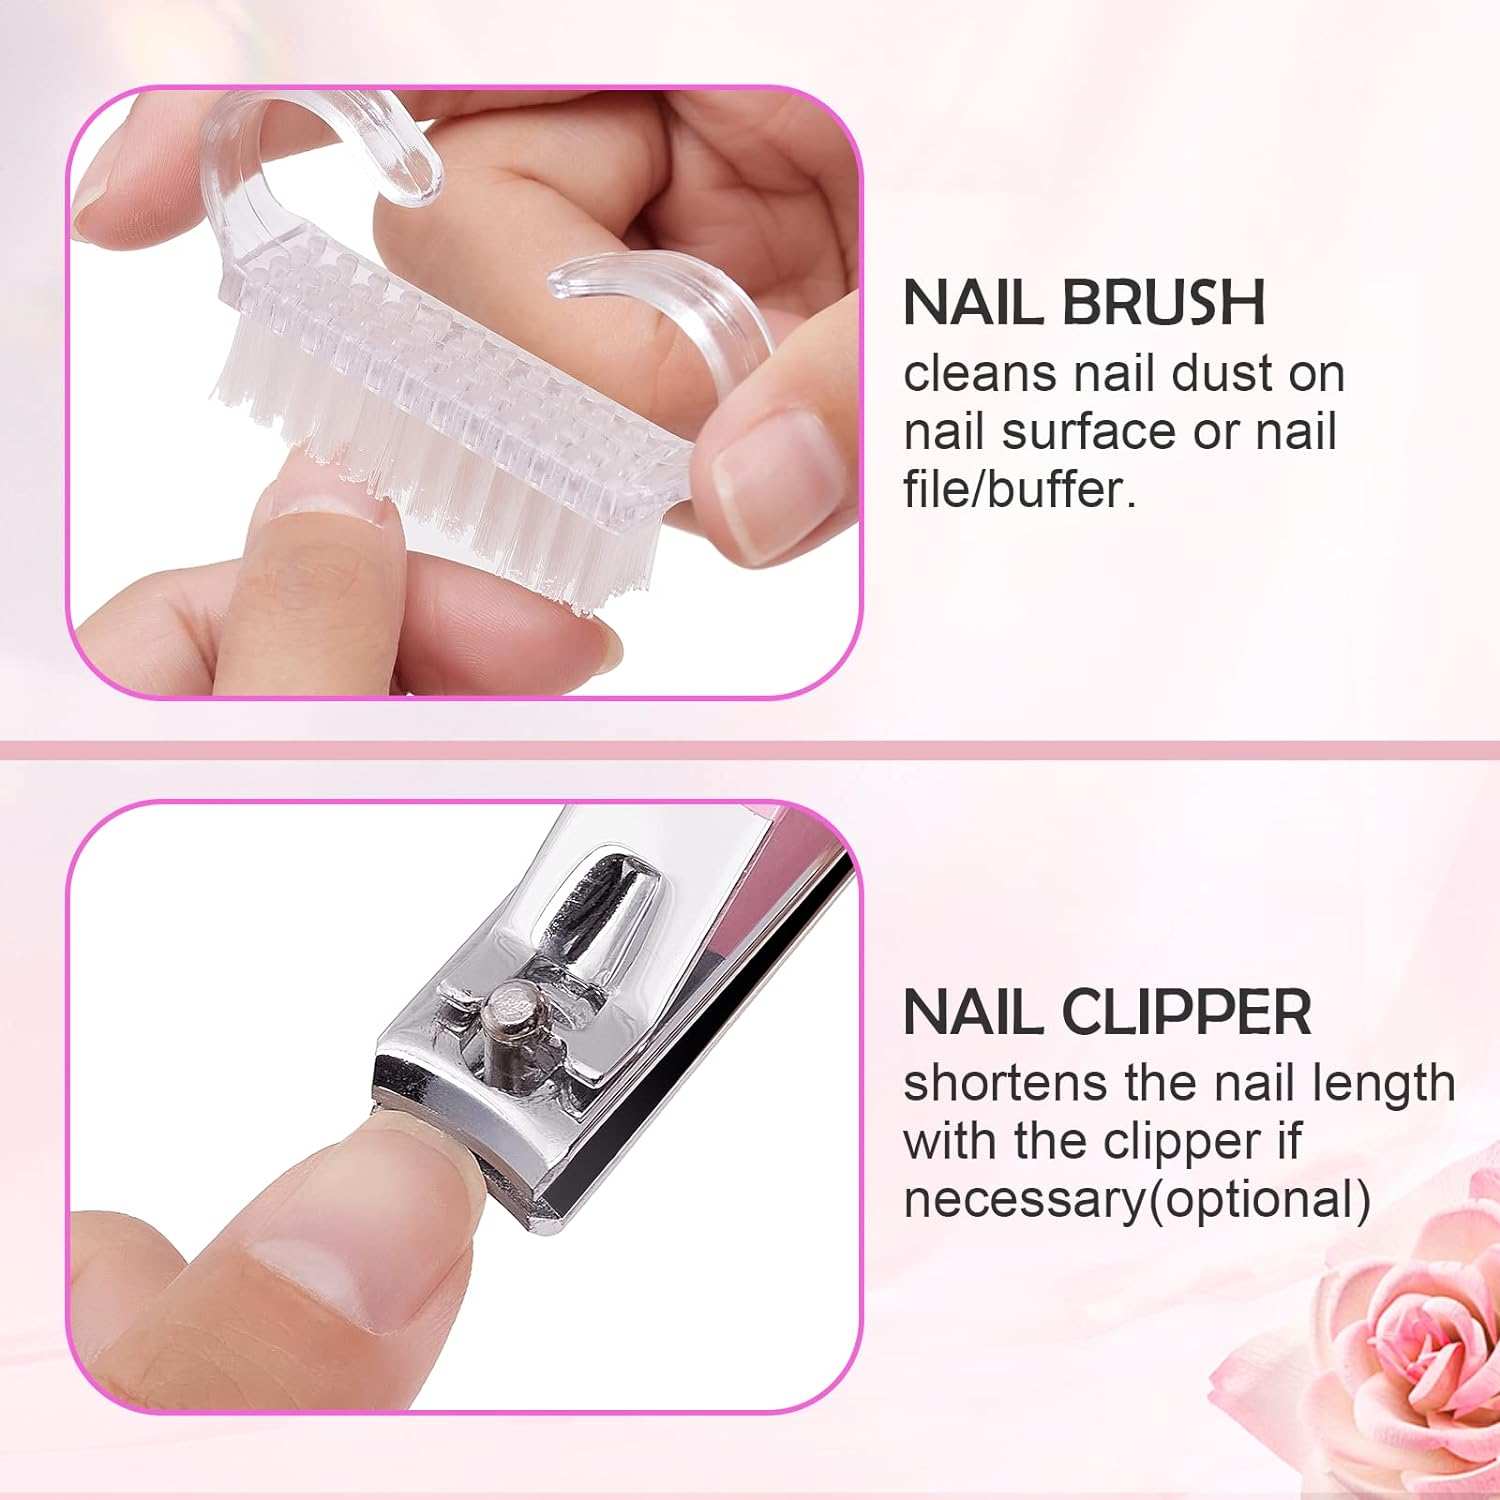 MakarttProfessional Nail Prep Manicure Tool Kit
Multifunctional Manicure Tool Kit - Makartt Nail Care Set comes with Cuticle Nipper, Cuticle Pusher, Nail Clipper, 180/240 Nail File, 100/180 Nail Sanding Buffer, 4